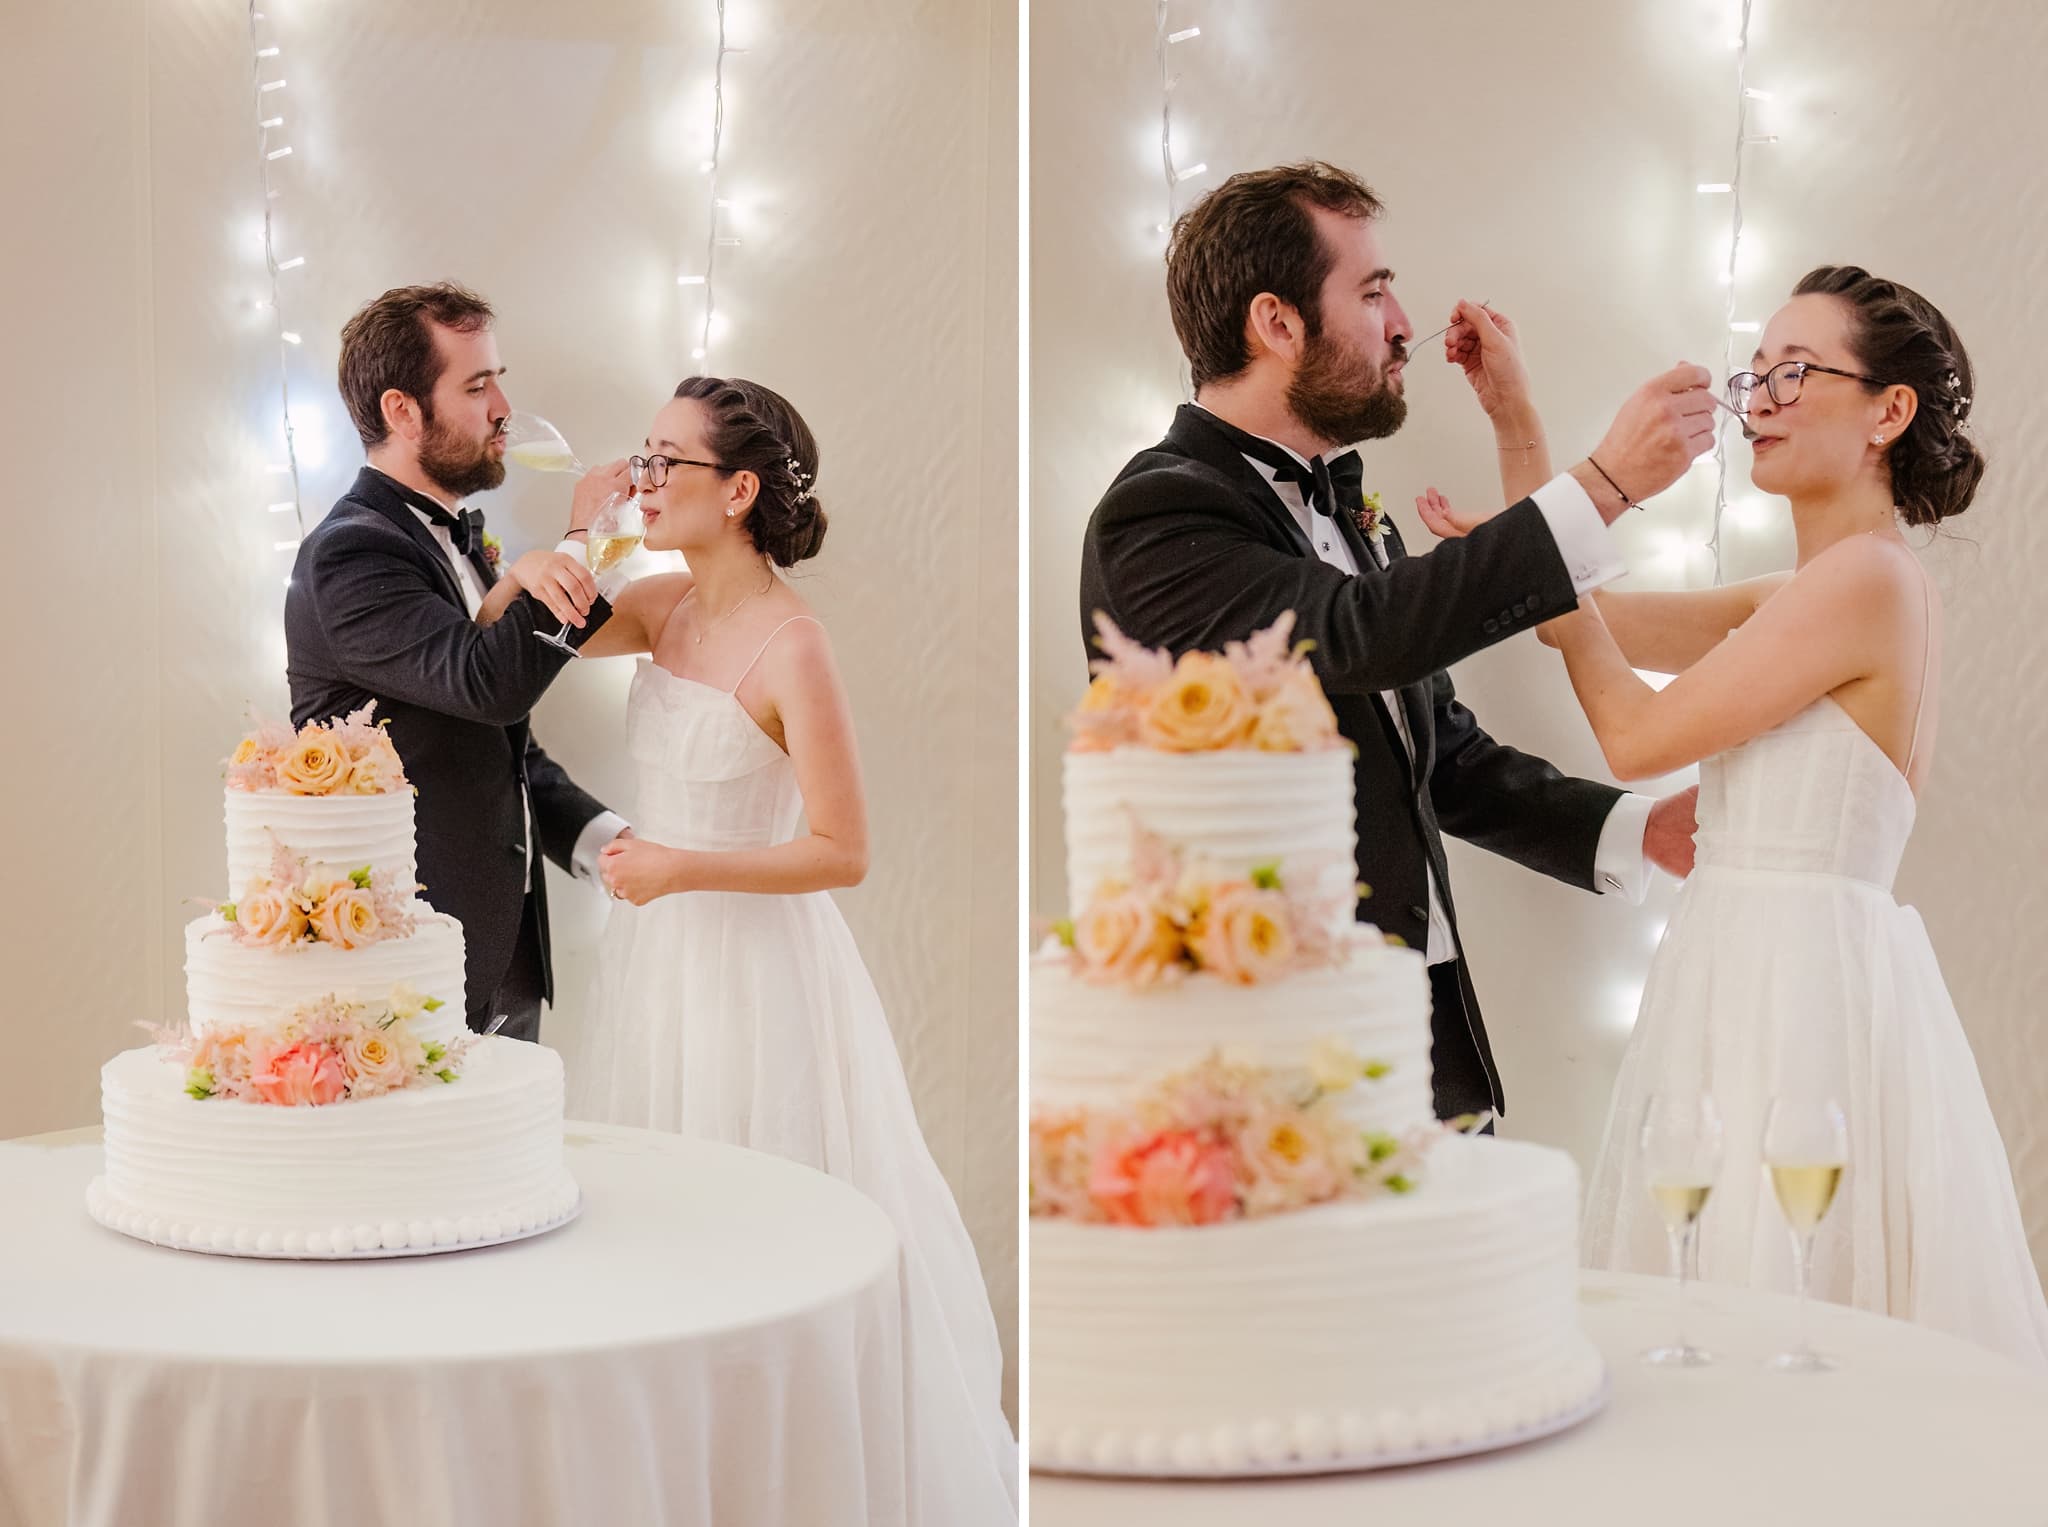 fotografo-matrimonio-destination-wedding-cake-torta-monastero-fortezza-santo-spirito-abruzzo